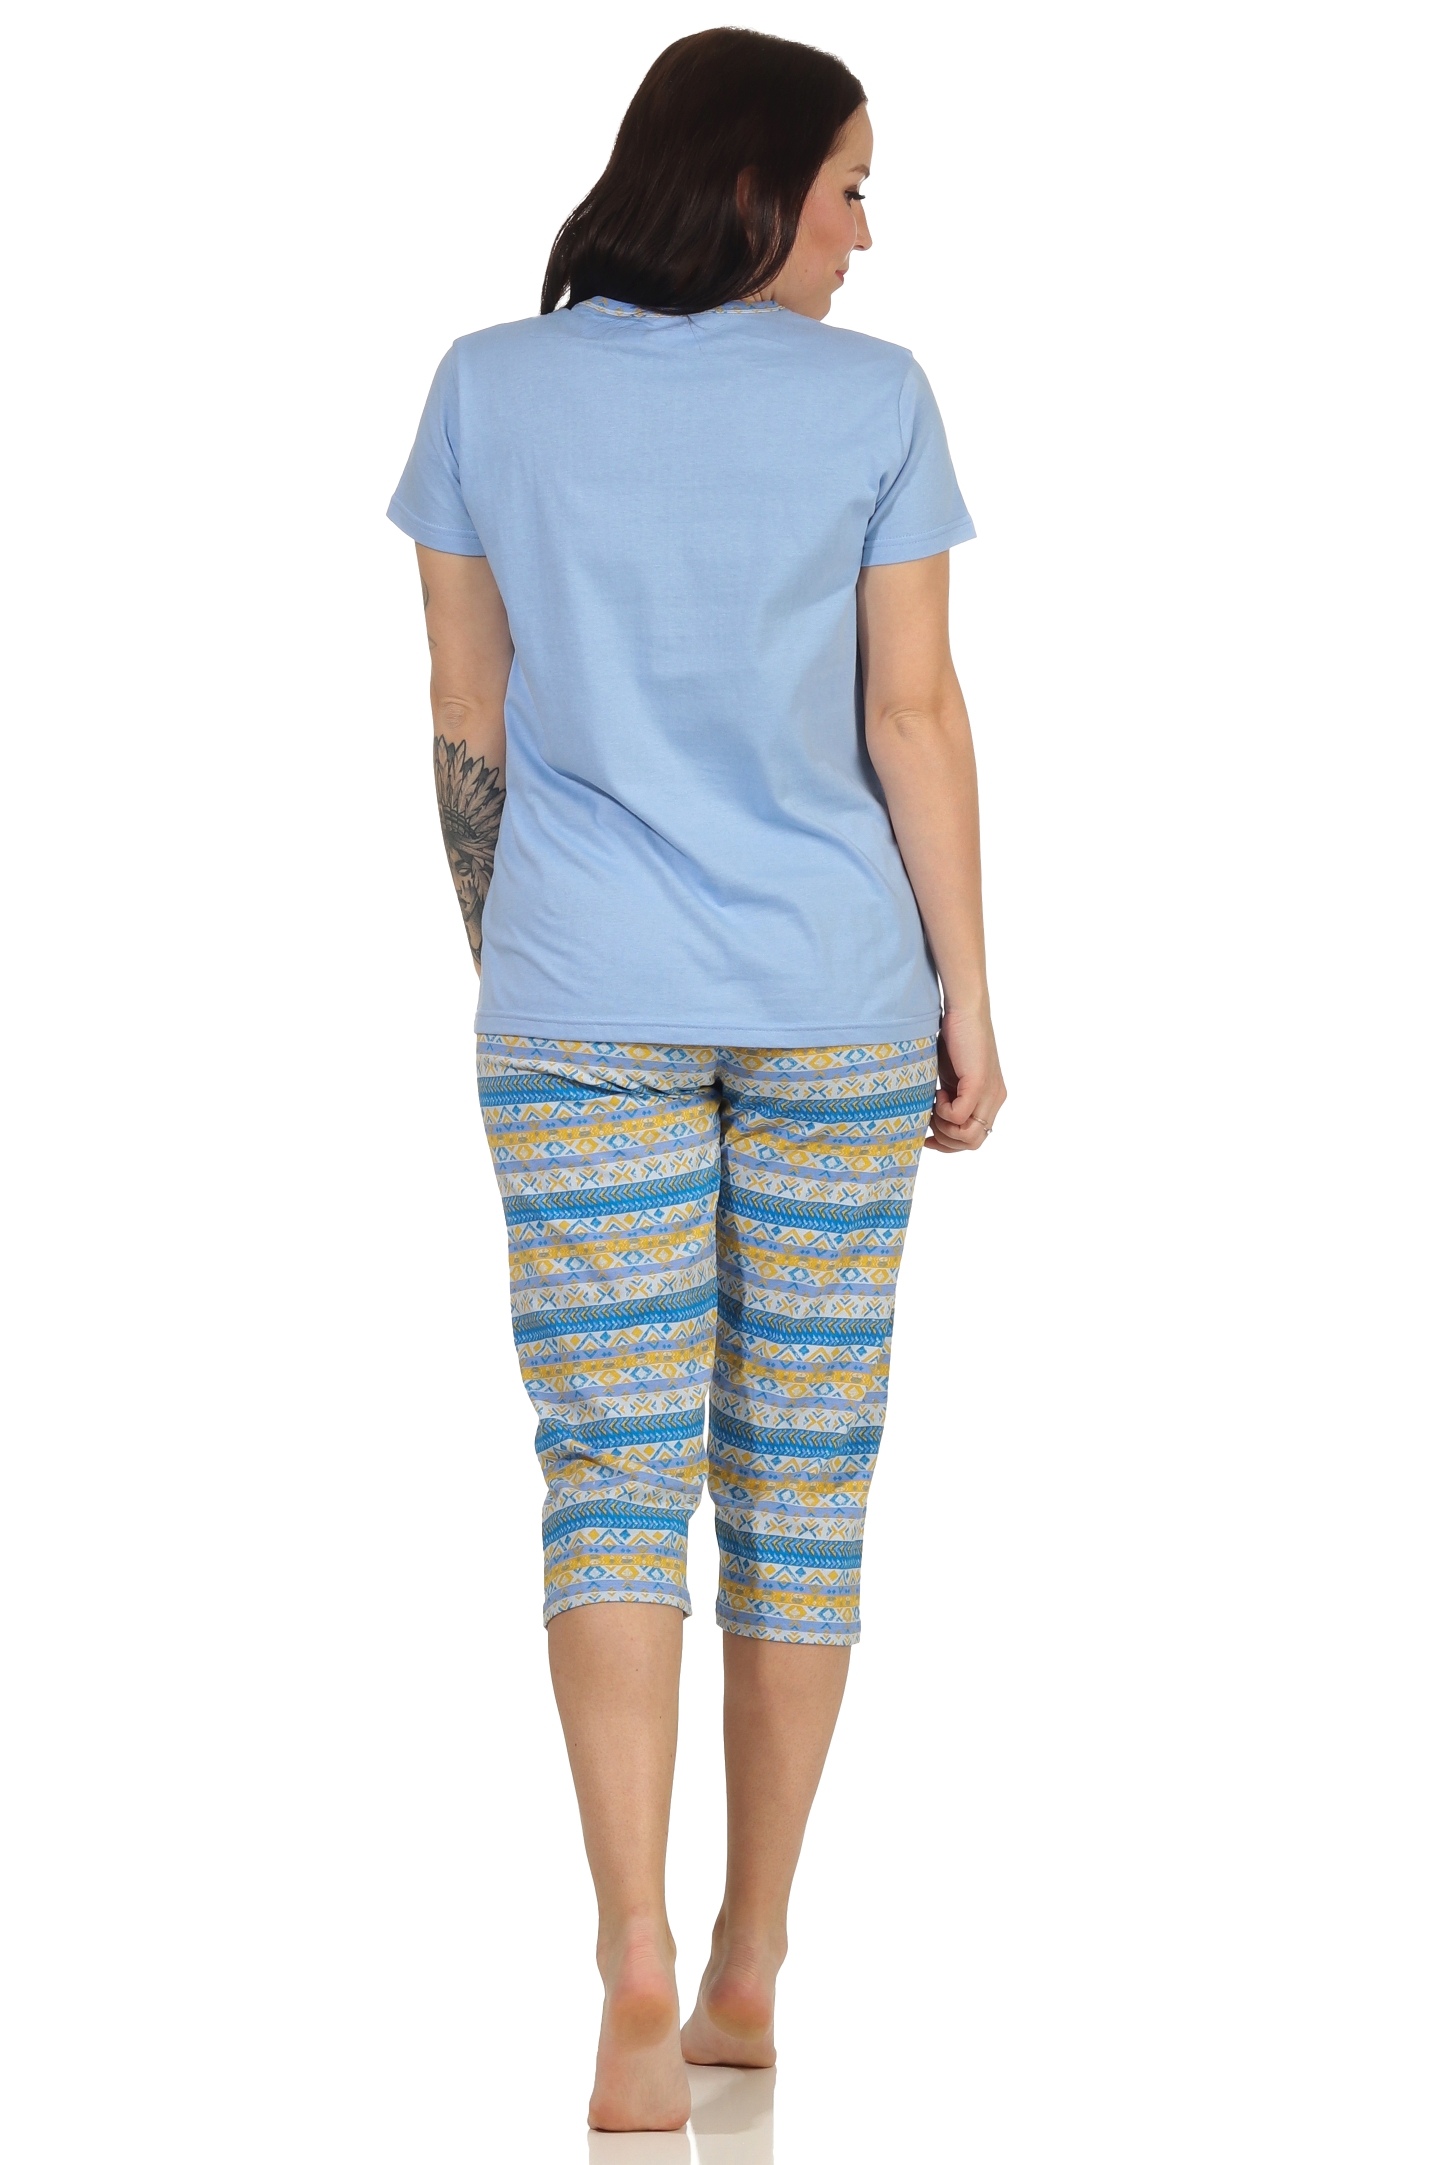 Damen kurzarm Schlafanzug Pyjama mit Capri Hose im Ethnolook - 66627